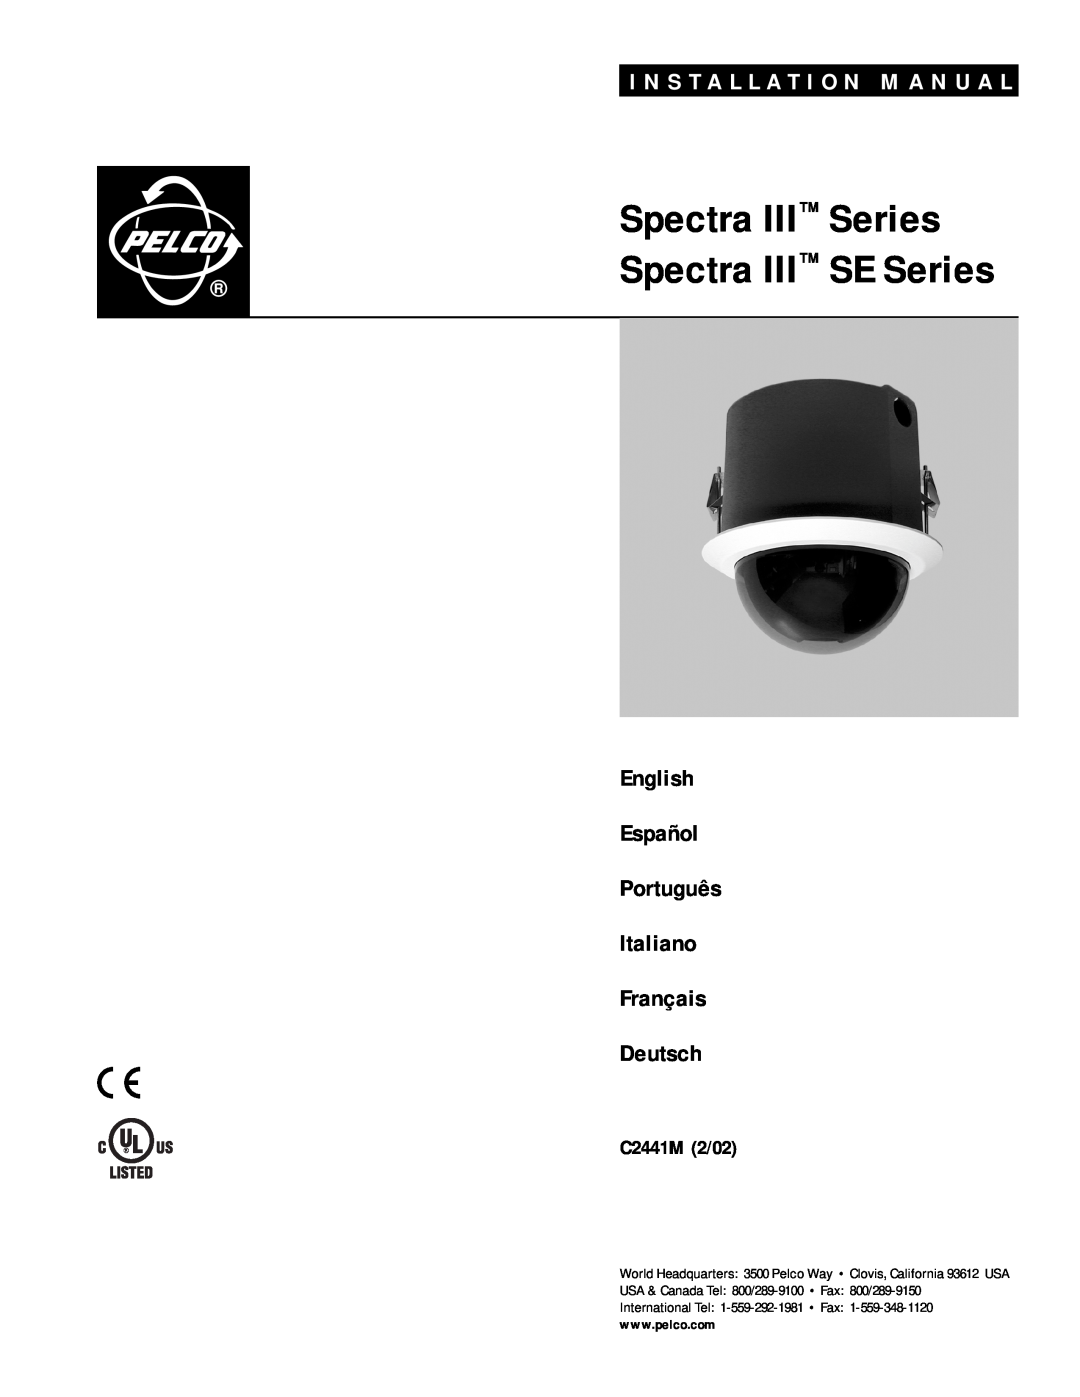 Pelco SE SERIES installation manual Spectra III Series Spectra III SE Series, I N S T A L L A T I O N M A N U A L, Deutsch 